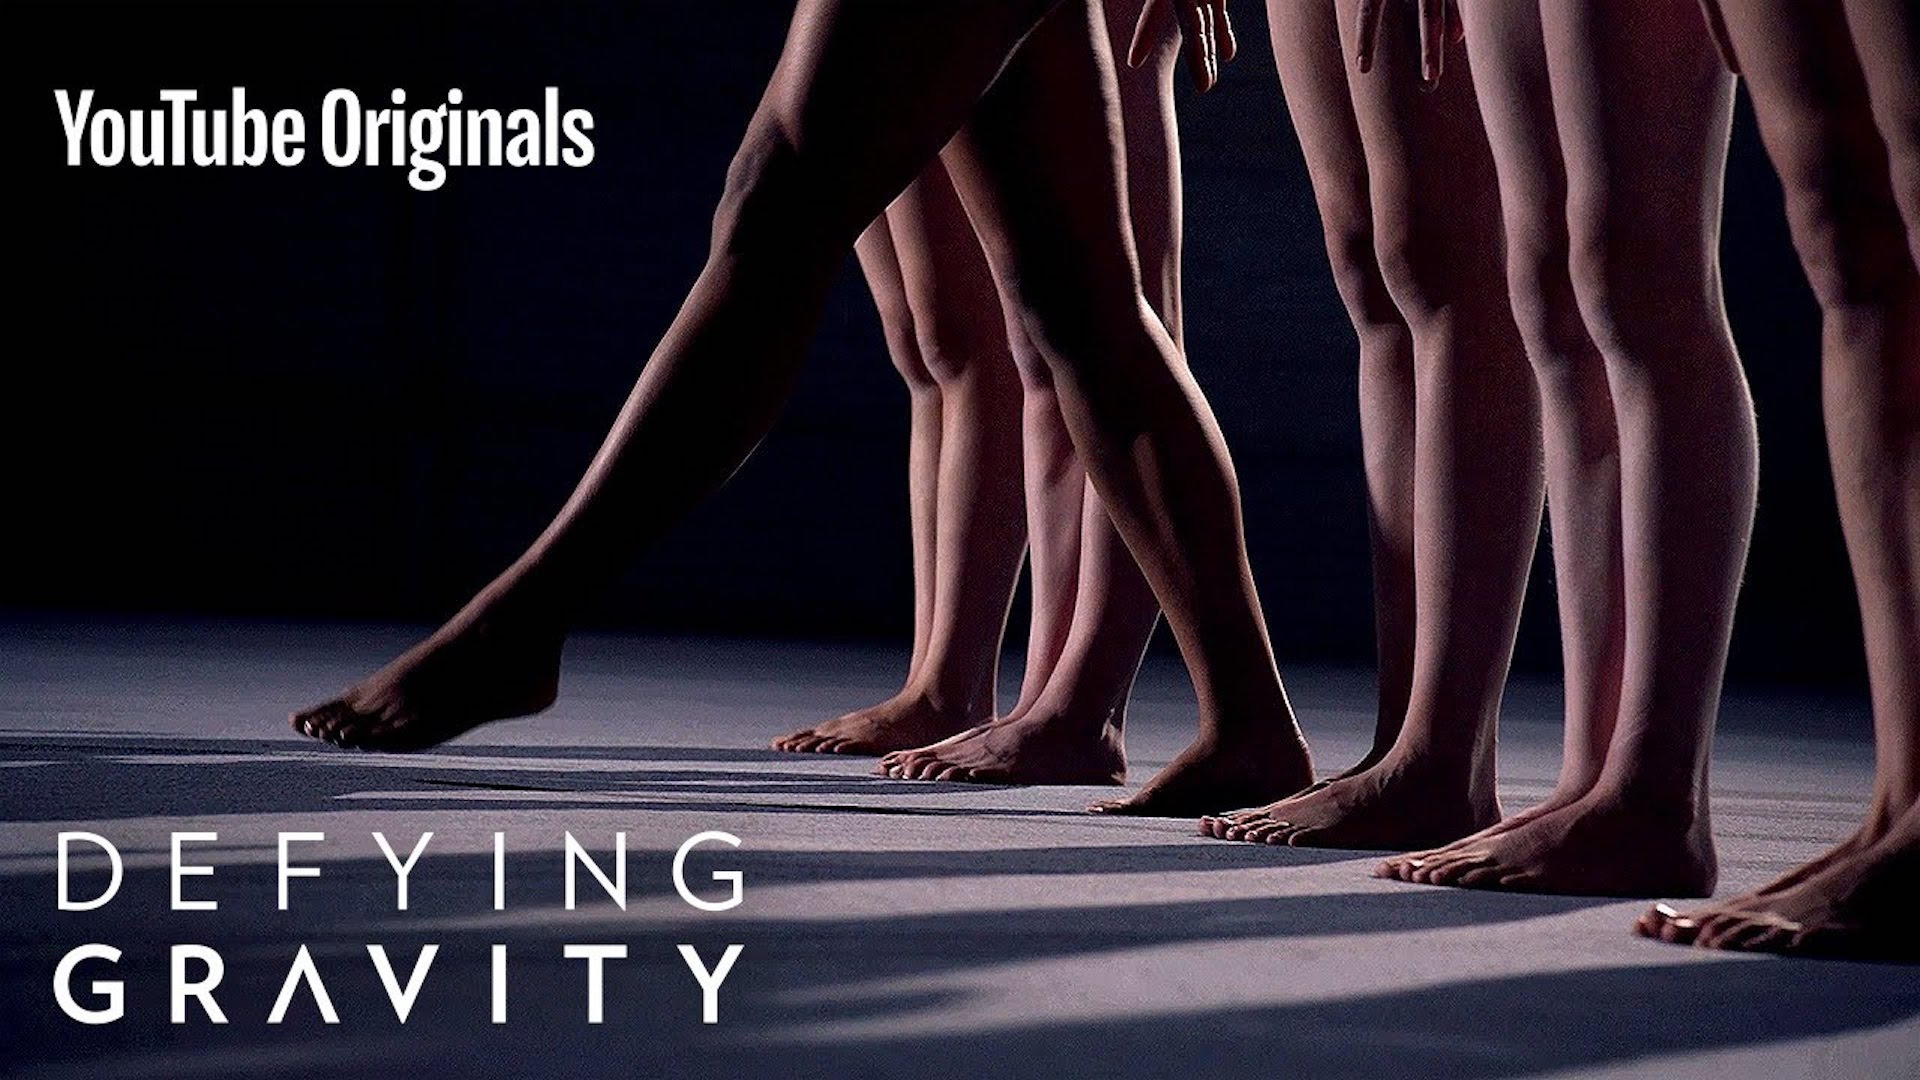 Show Defying Gravity: The Untold Story of Women's Gymnastics